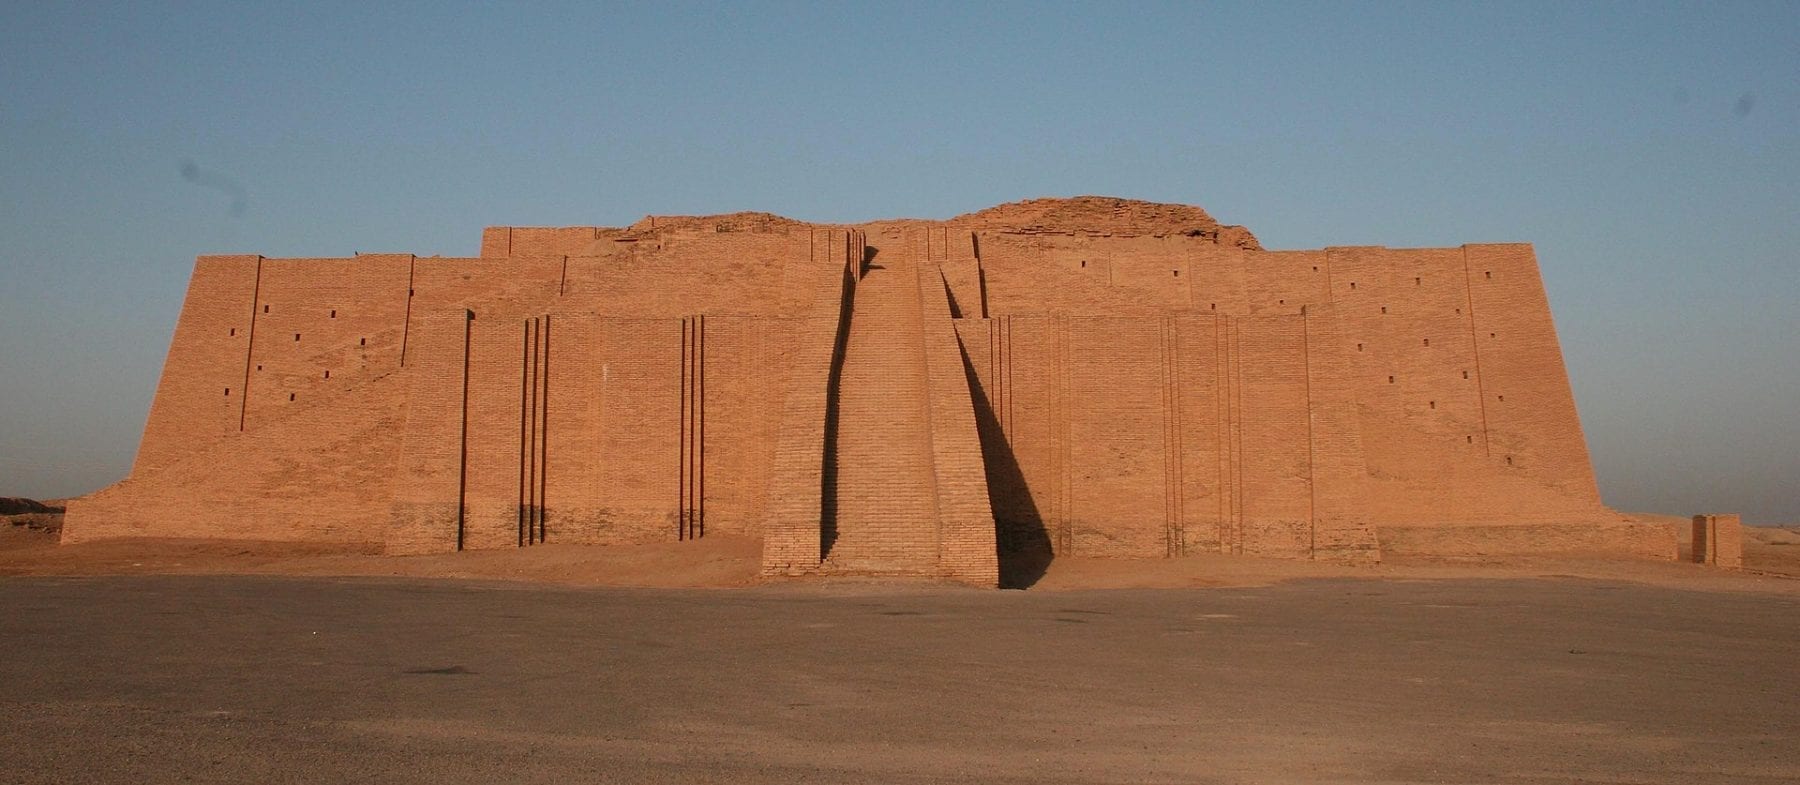 The Ziggurat of Ur. Credit: Wikimedia Commons